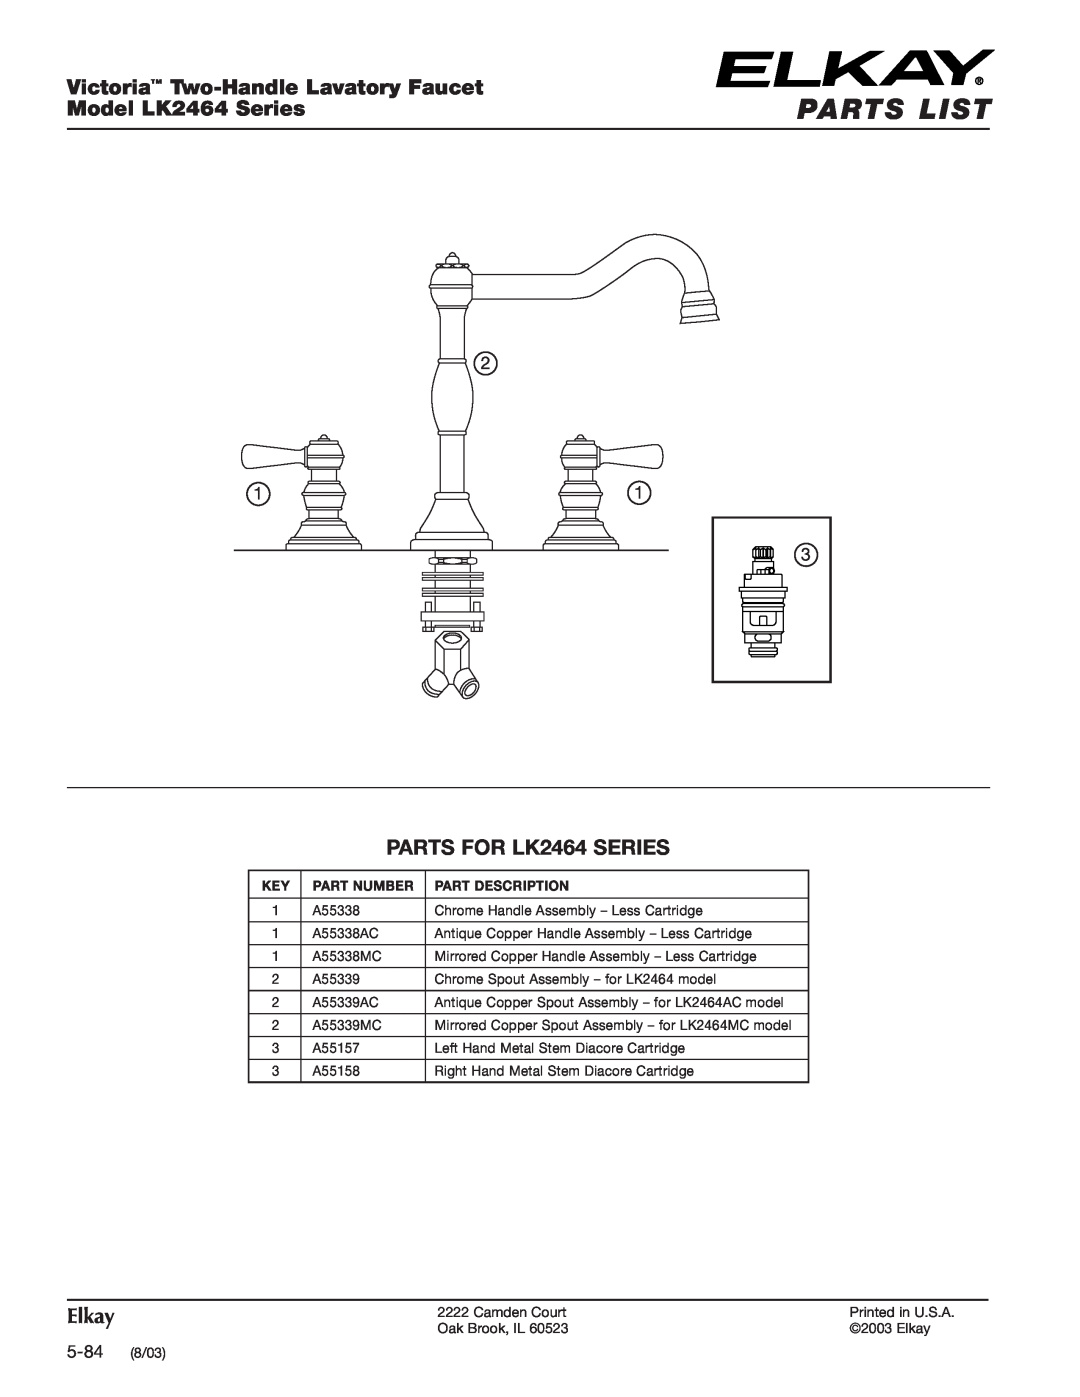 Elkay Parts List, PARTS FOR LK2464 SERIES, Victoria Two-HandleLavatory Faucet, Model LK2464 Series, Elkay, Part Number 